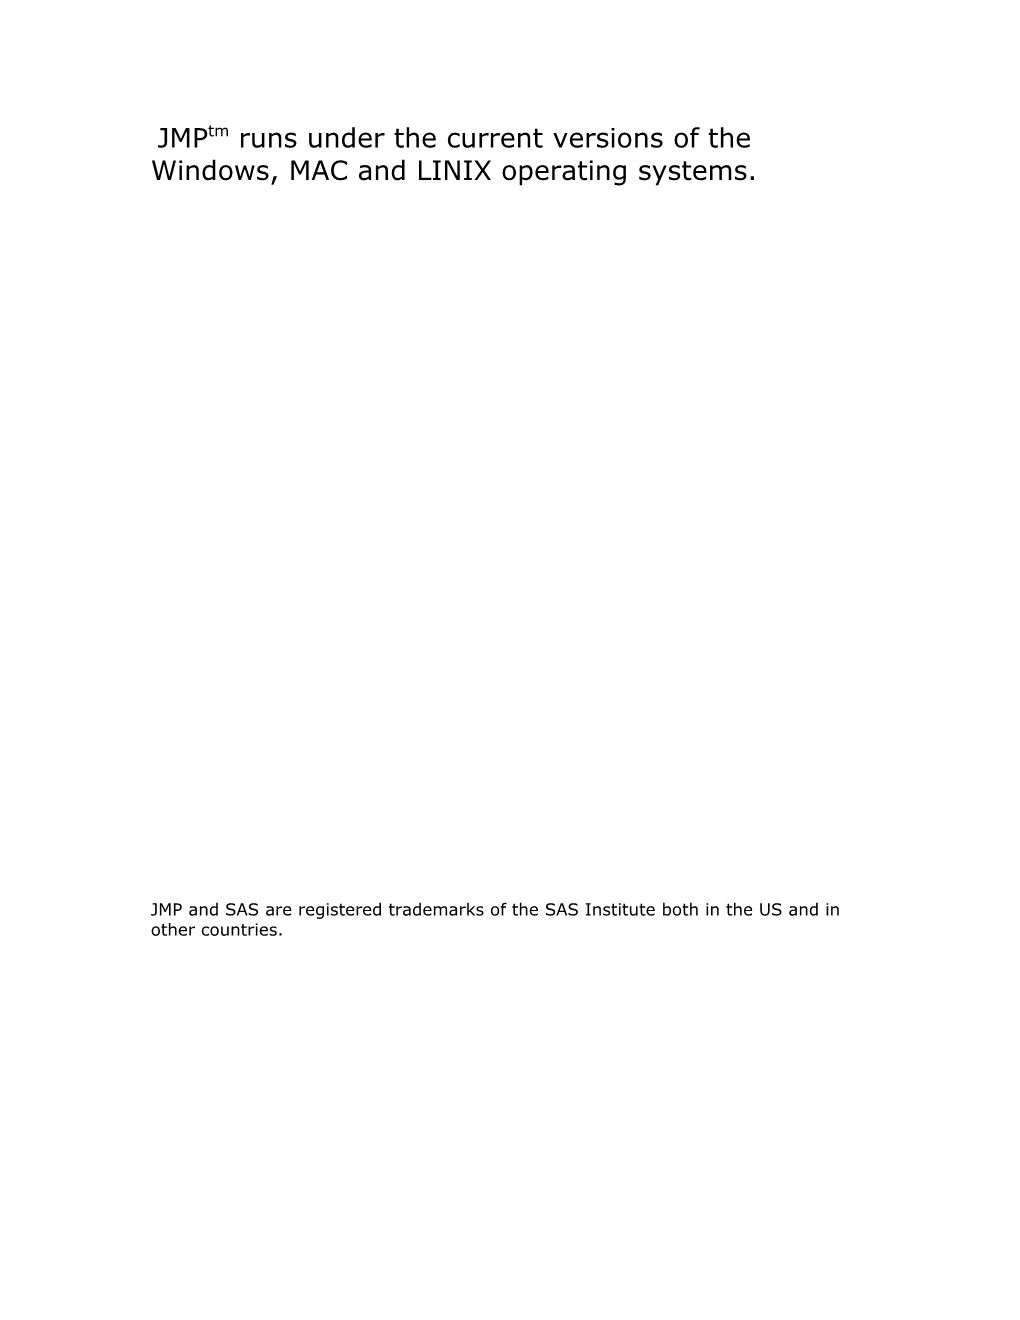 Jmptm Runs Under The Windows, MAC And LINIX Operating Systems